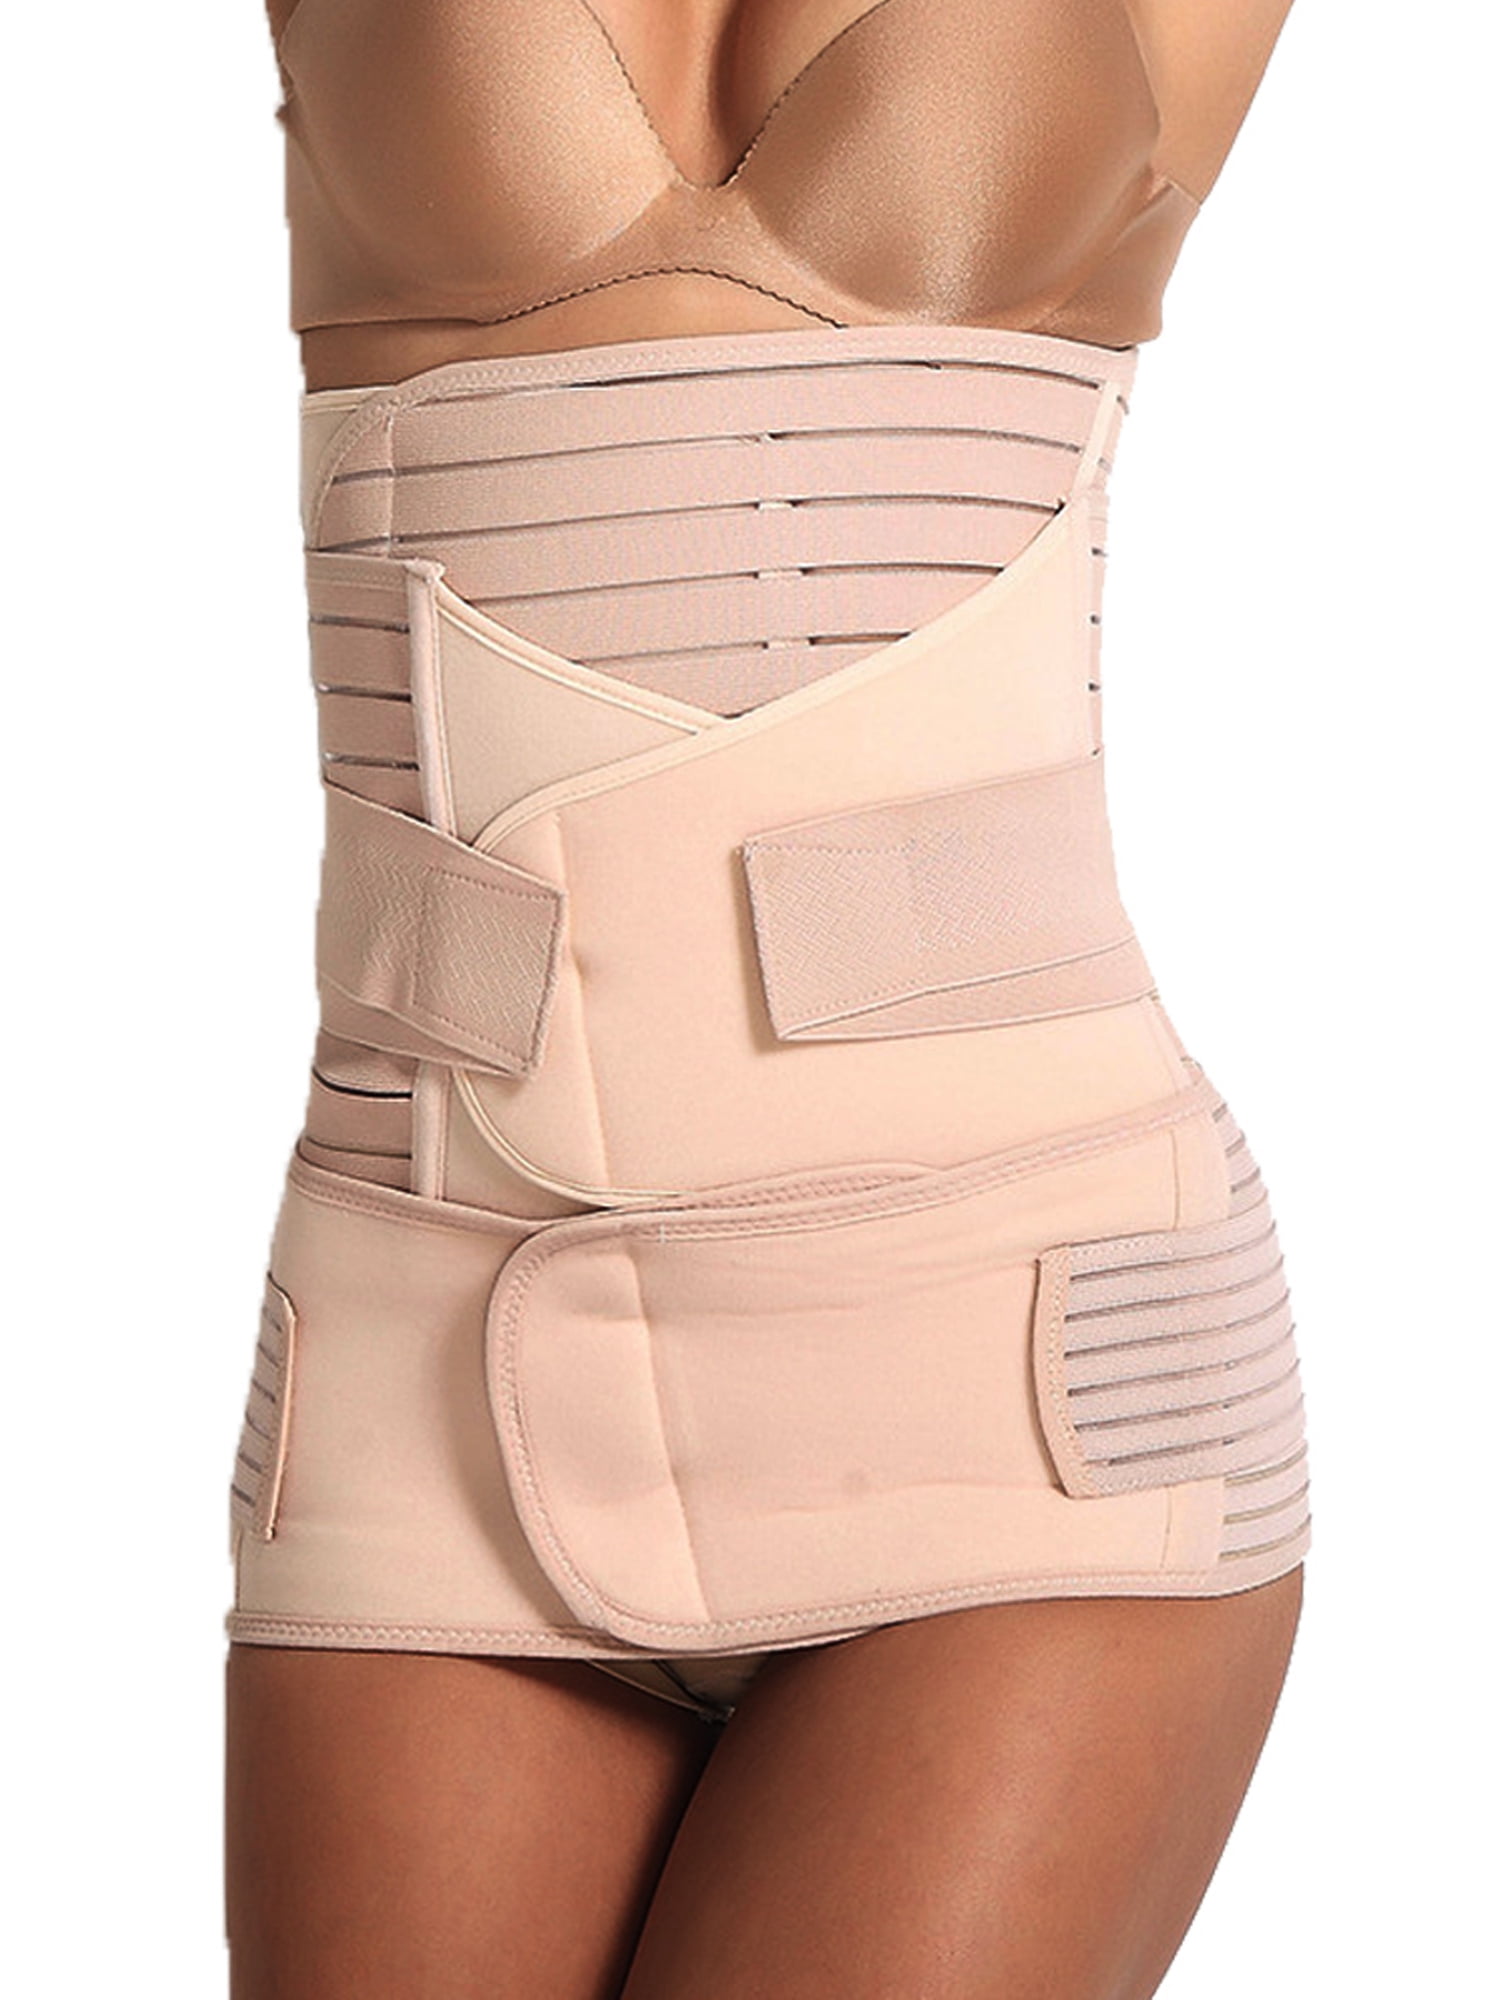 Maternity Belt Adjustable 3 in 1 Postpartum Support Belt Recovery Belly/ Waist/Pelvis Wrap Girdle Support Band Belt 